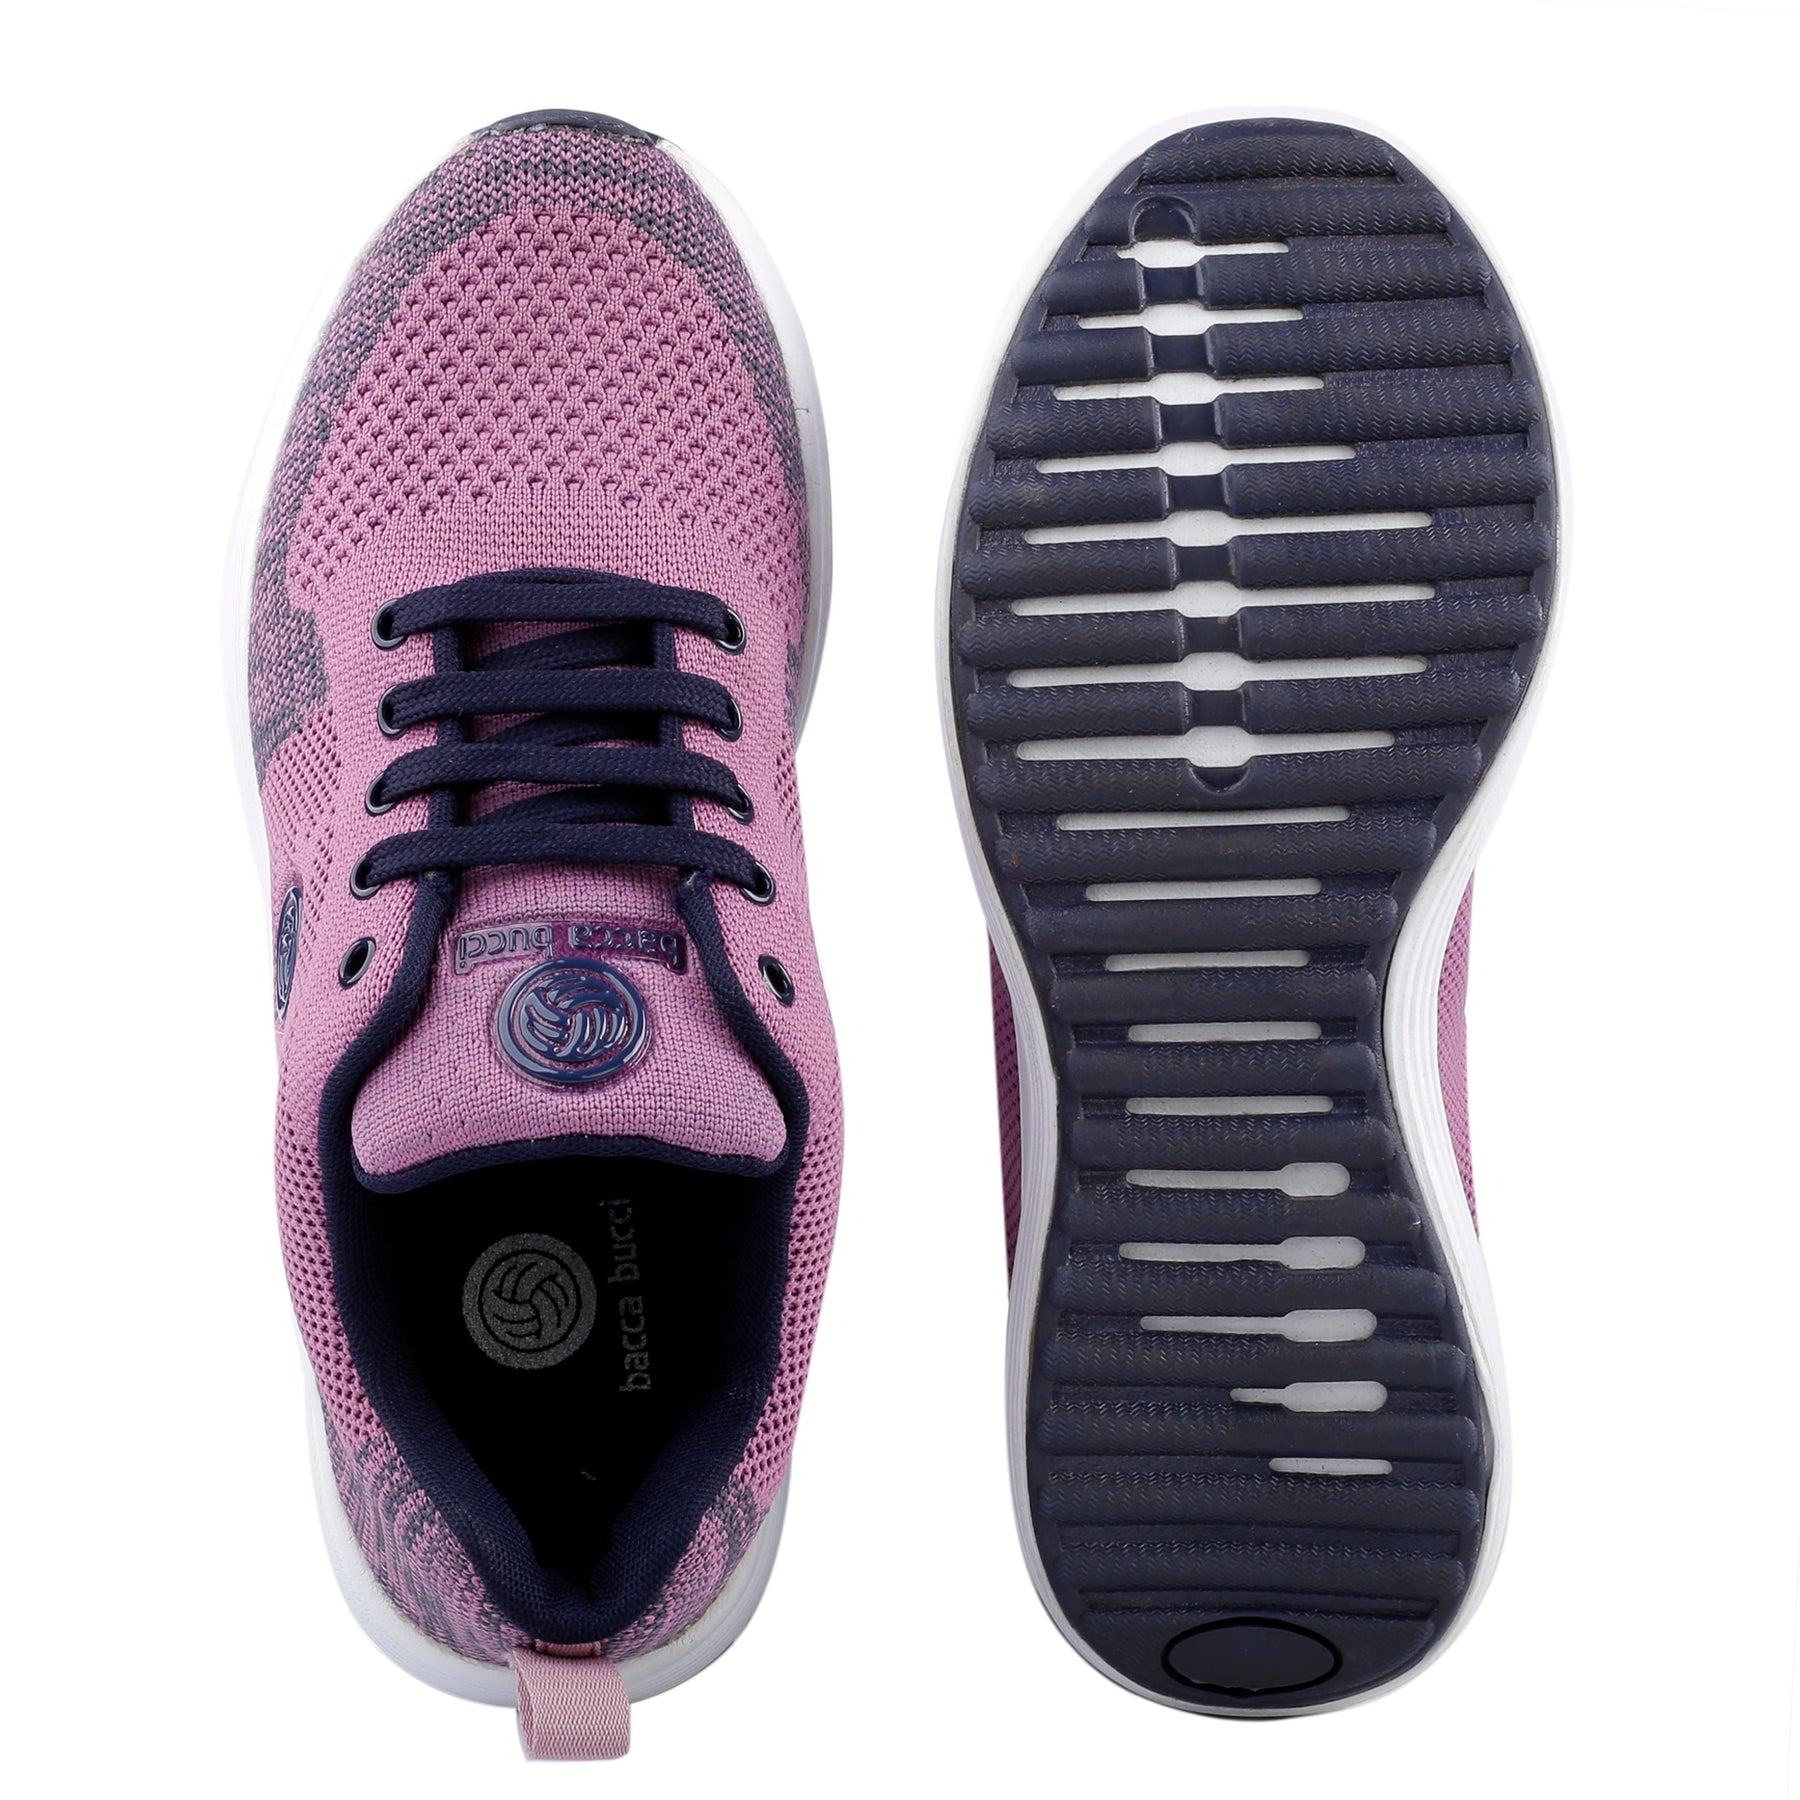 running shoes for women, sneaker shoes for women, casual shoes for women